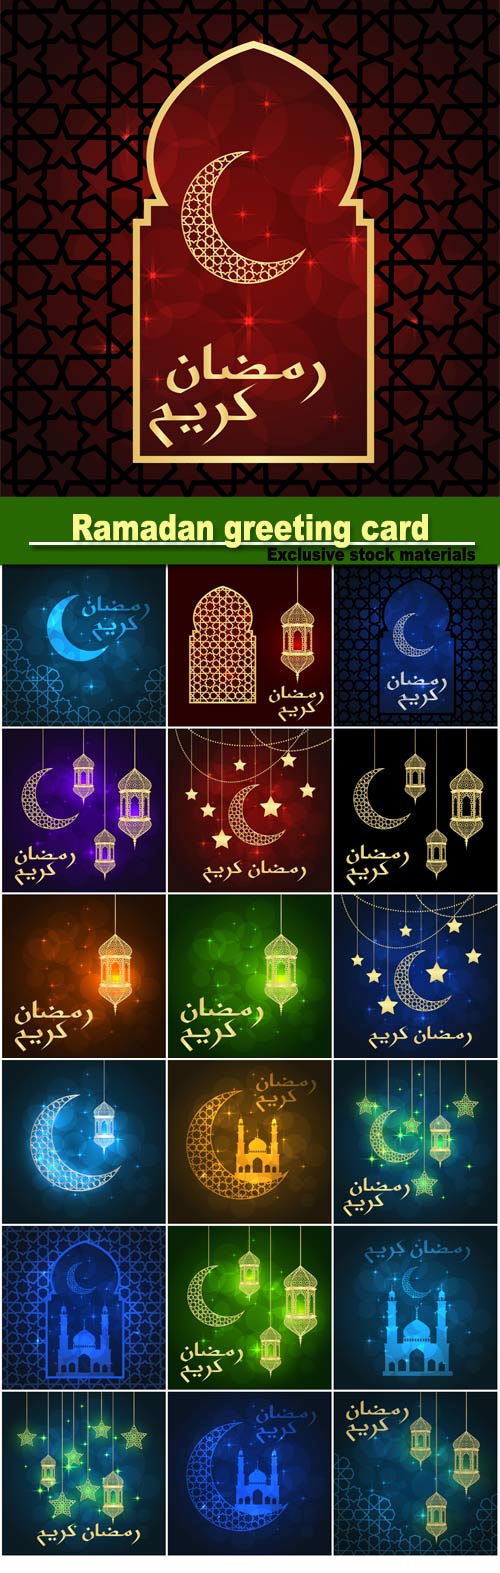 Ramadan greeting card, vector backgrounds